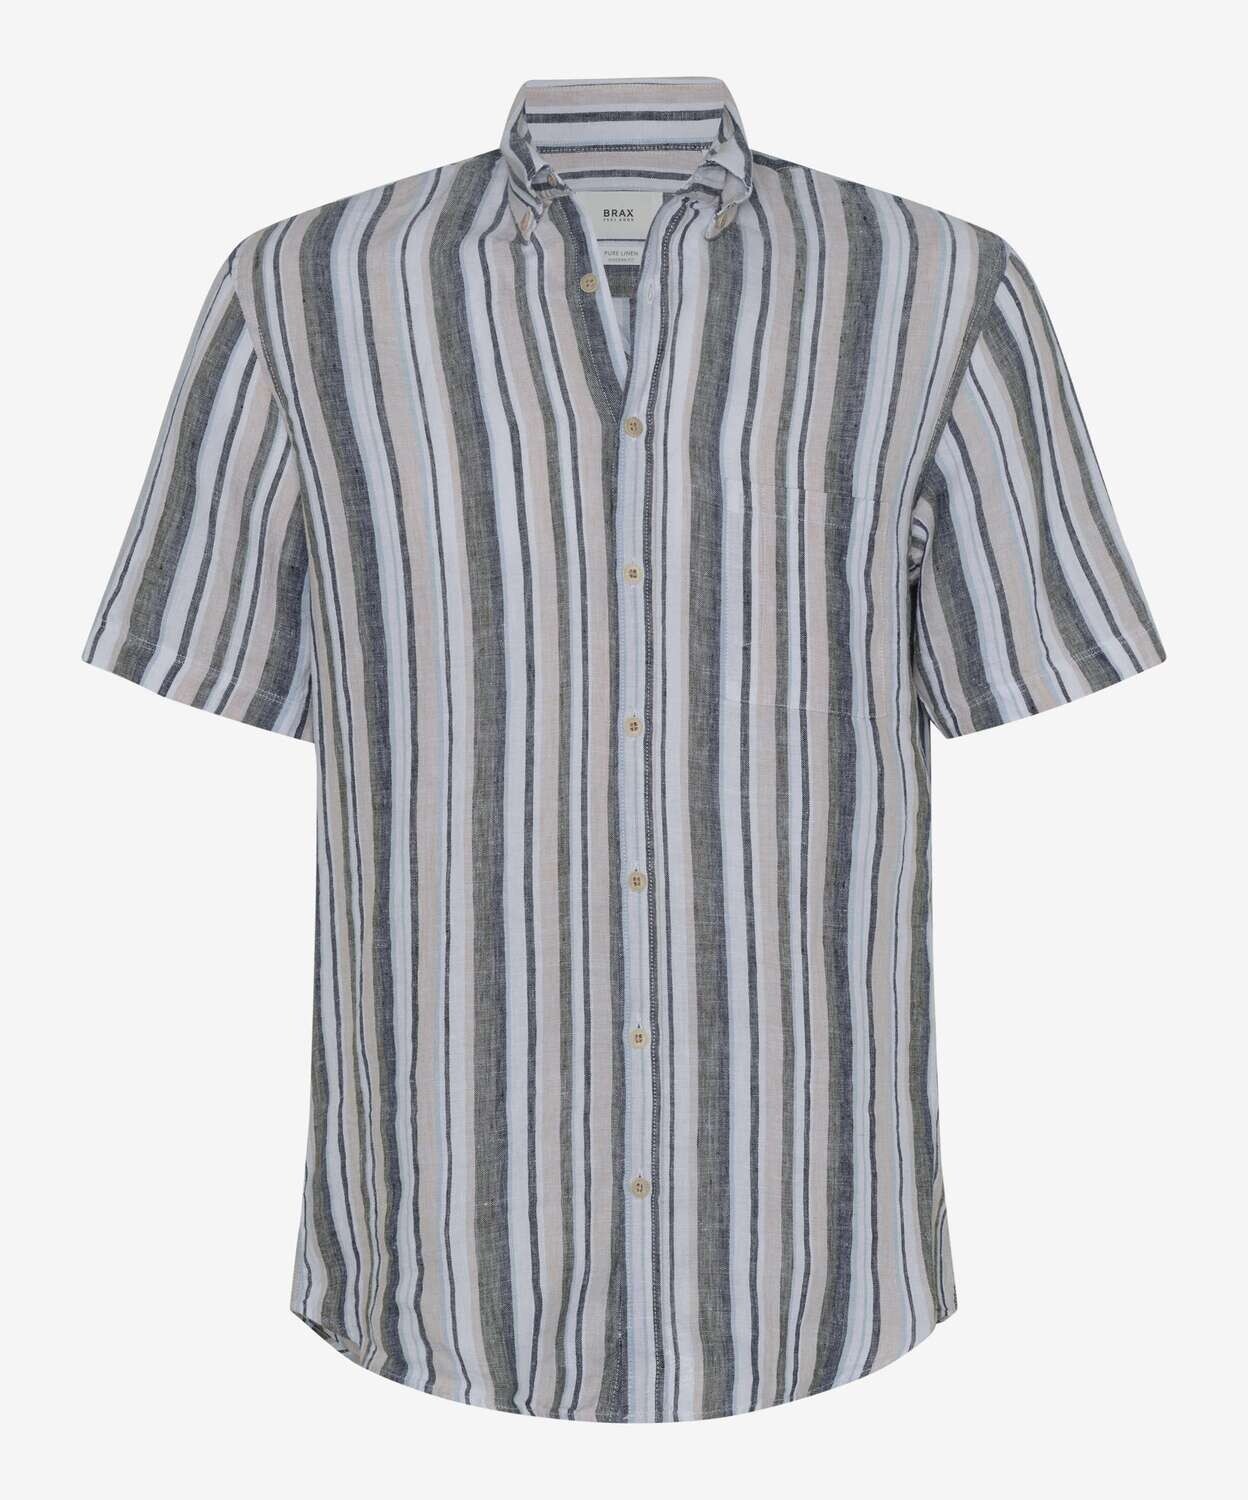 Brax Men short sleeve striped shirt multicolour